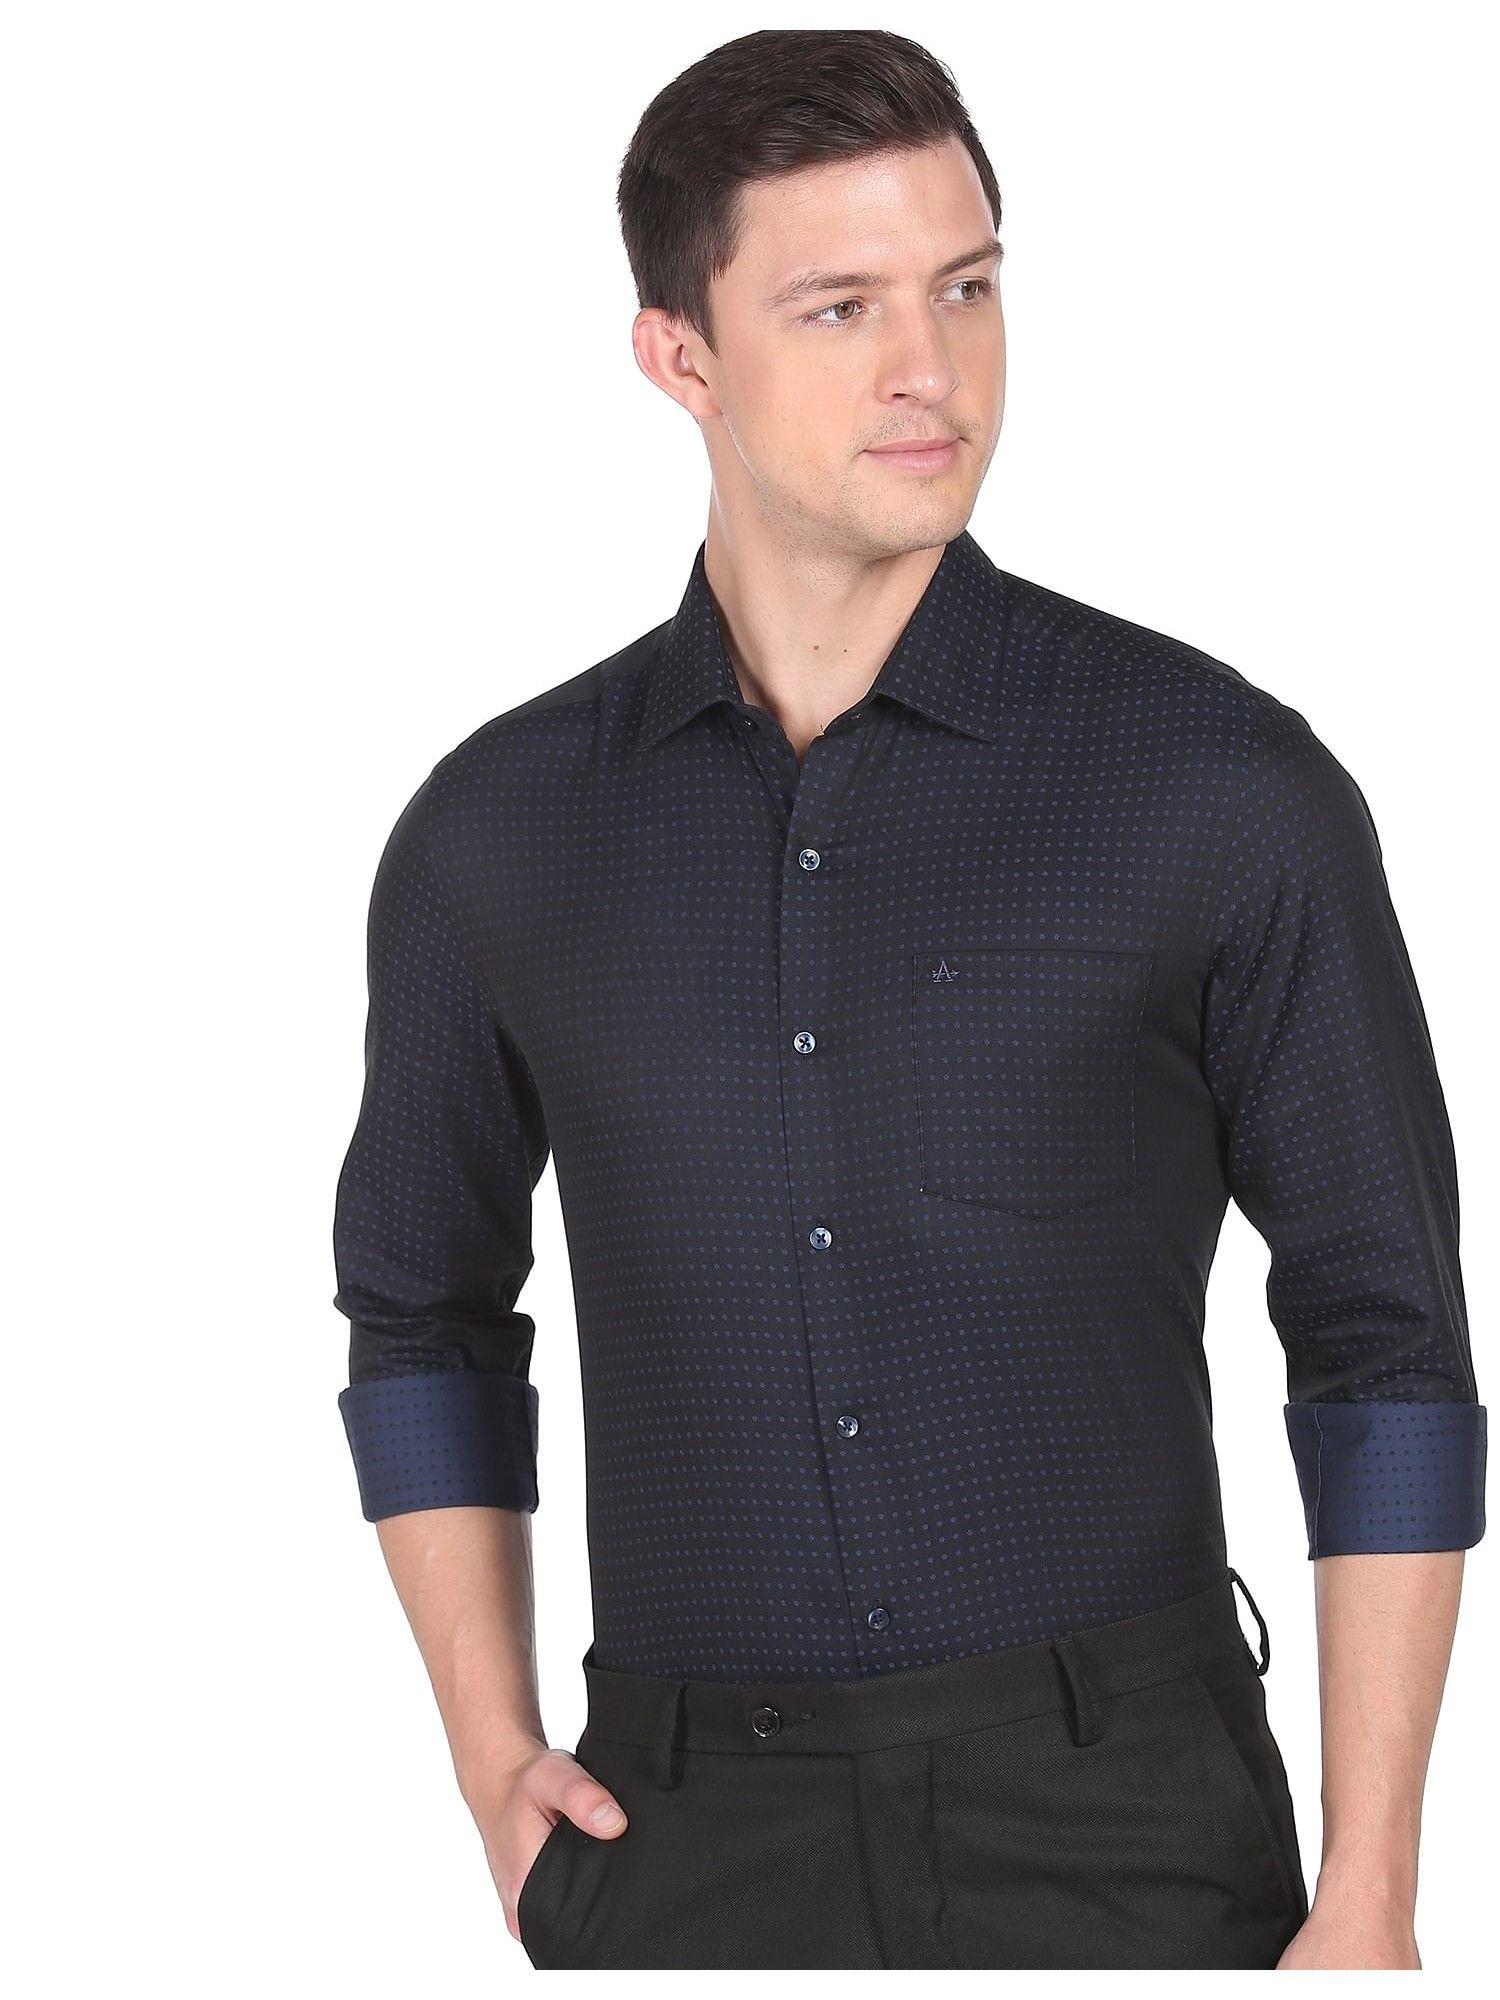 men-black-polka-dot-manhattan-slim-fit-formal-shirt